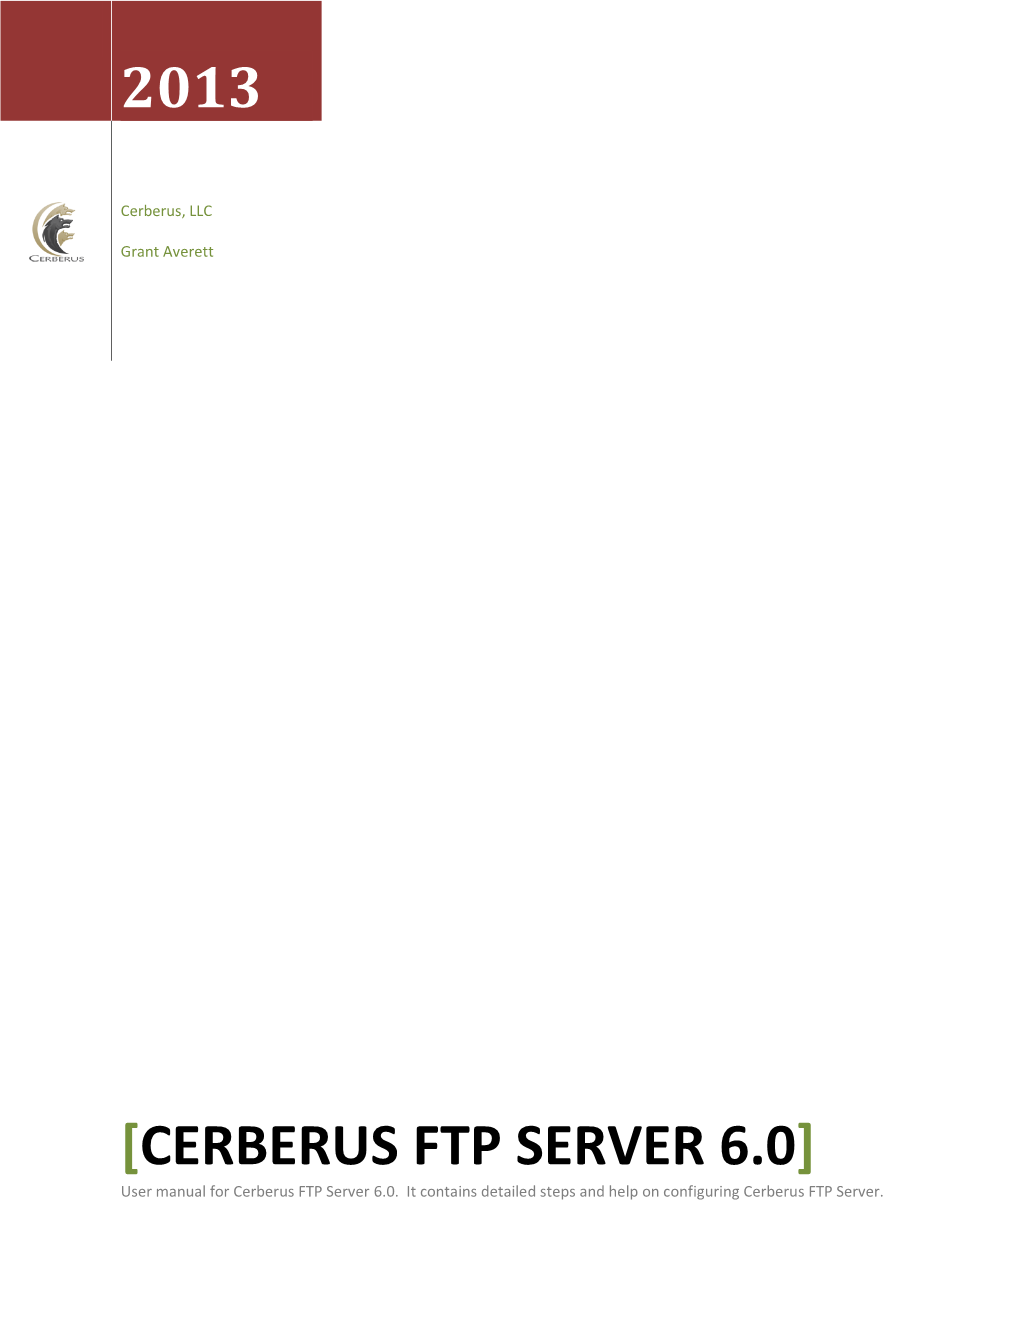 CERBERUS FTP SERVER 6.0] User Manual for Cerberus FTP Server 6.0